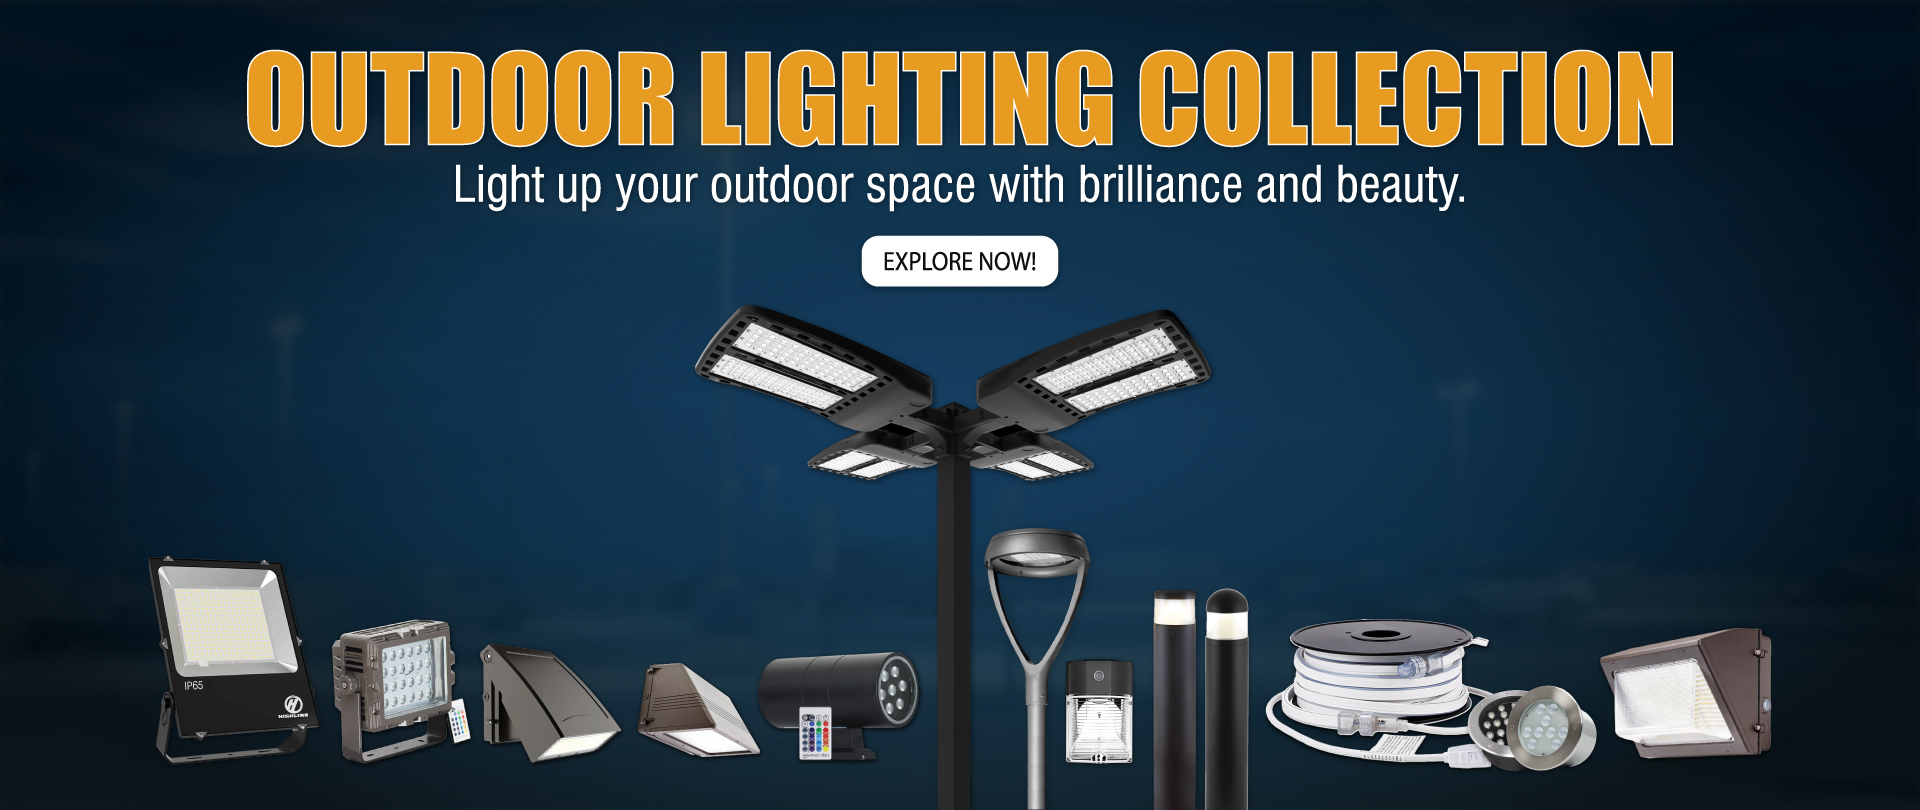 LED outdoor Lighting